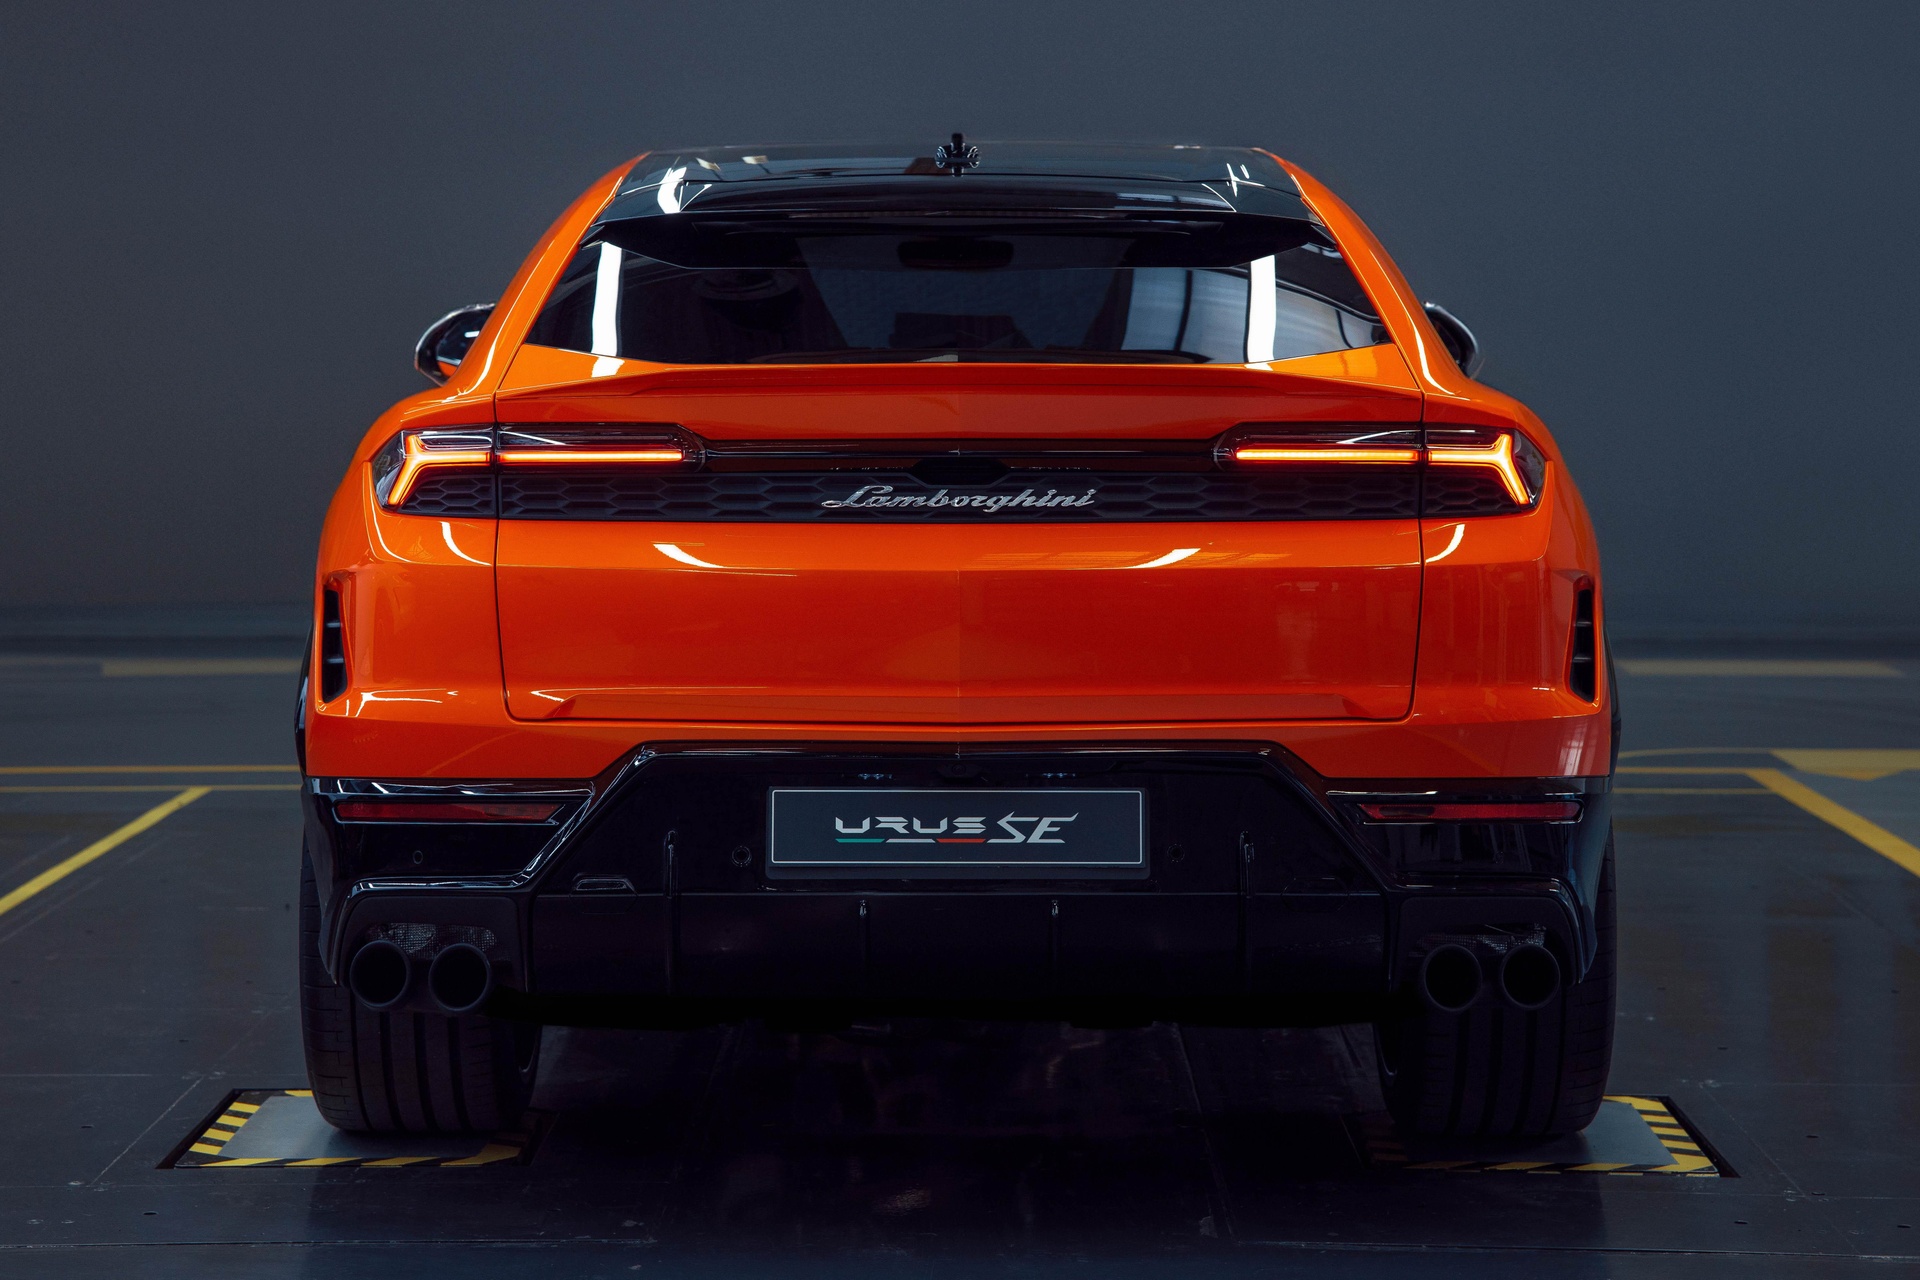 Chi tiết Lamborghini Urus SE - siêu SUV hybrid mạnh 800 mã lực